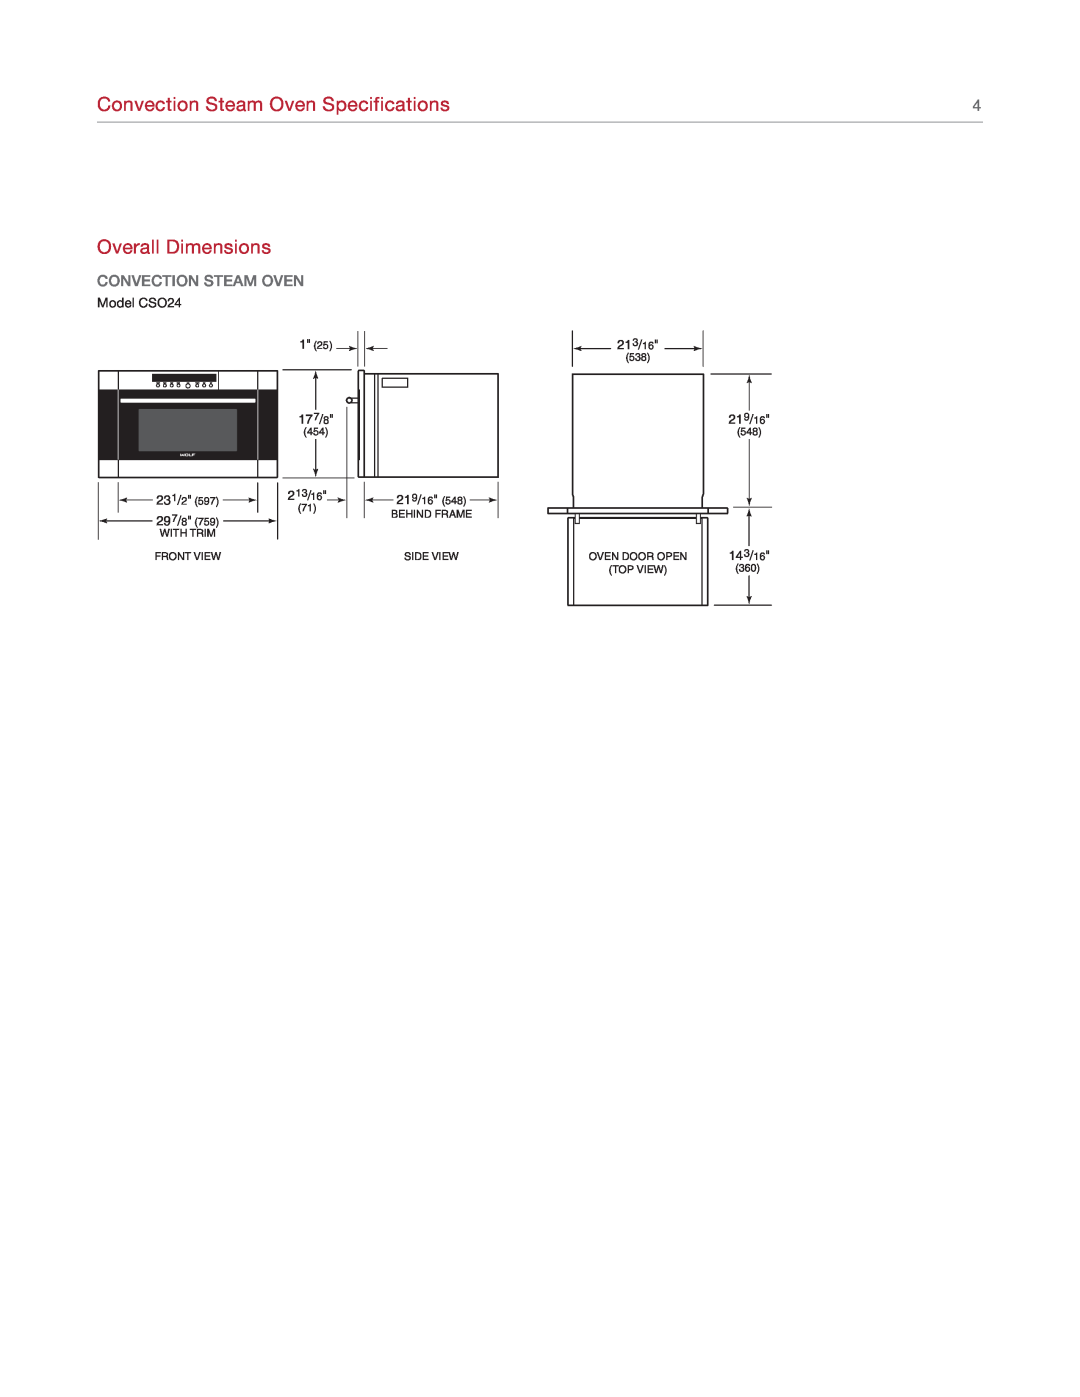 Sub-Zero manual Convection Steam Oven Specifications, Overall Dimensions, Model CSO24, 213/16, 17 7/8, 219/16, 143/16 